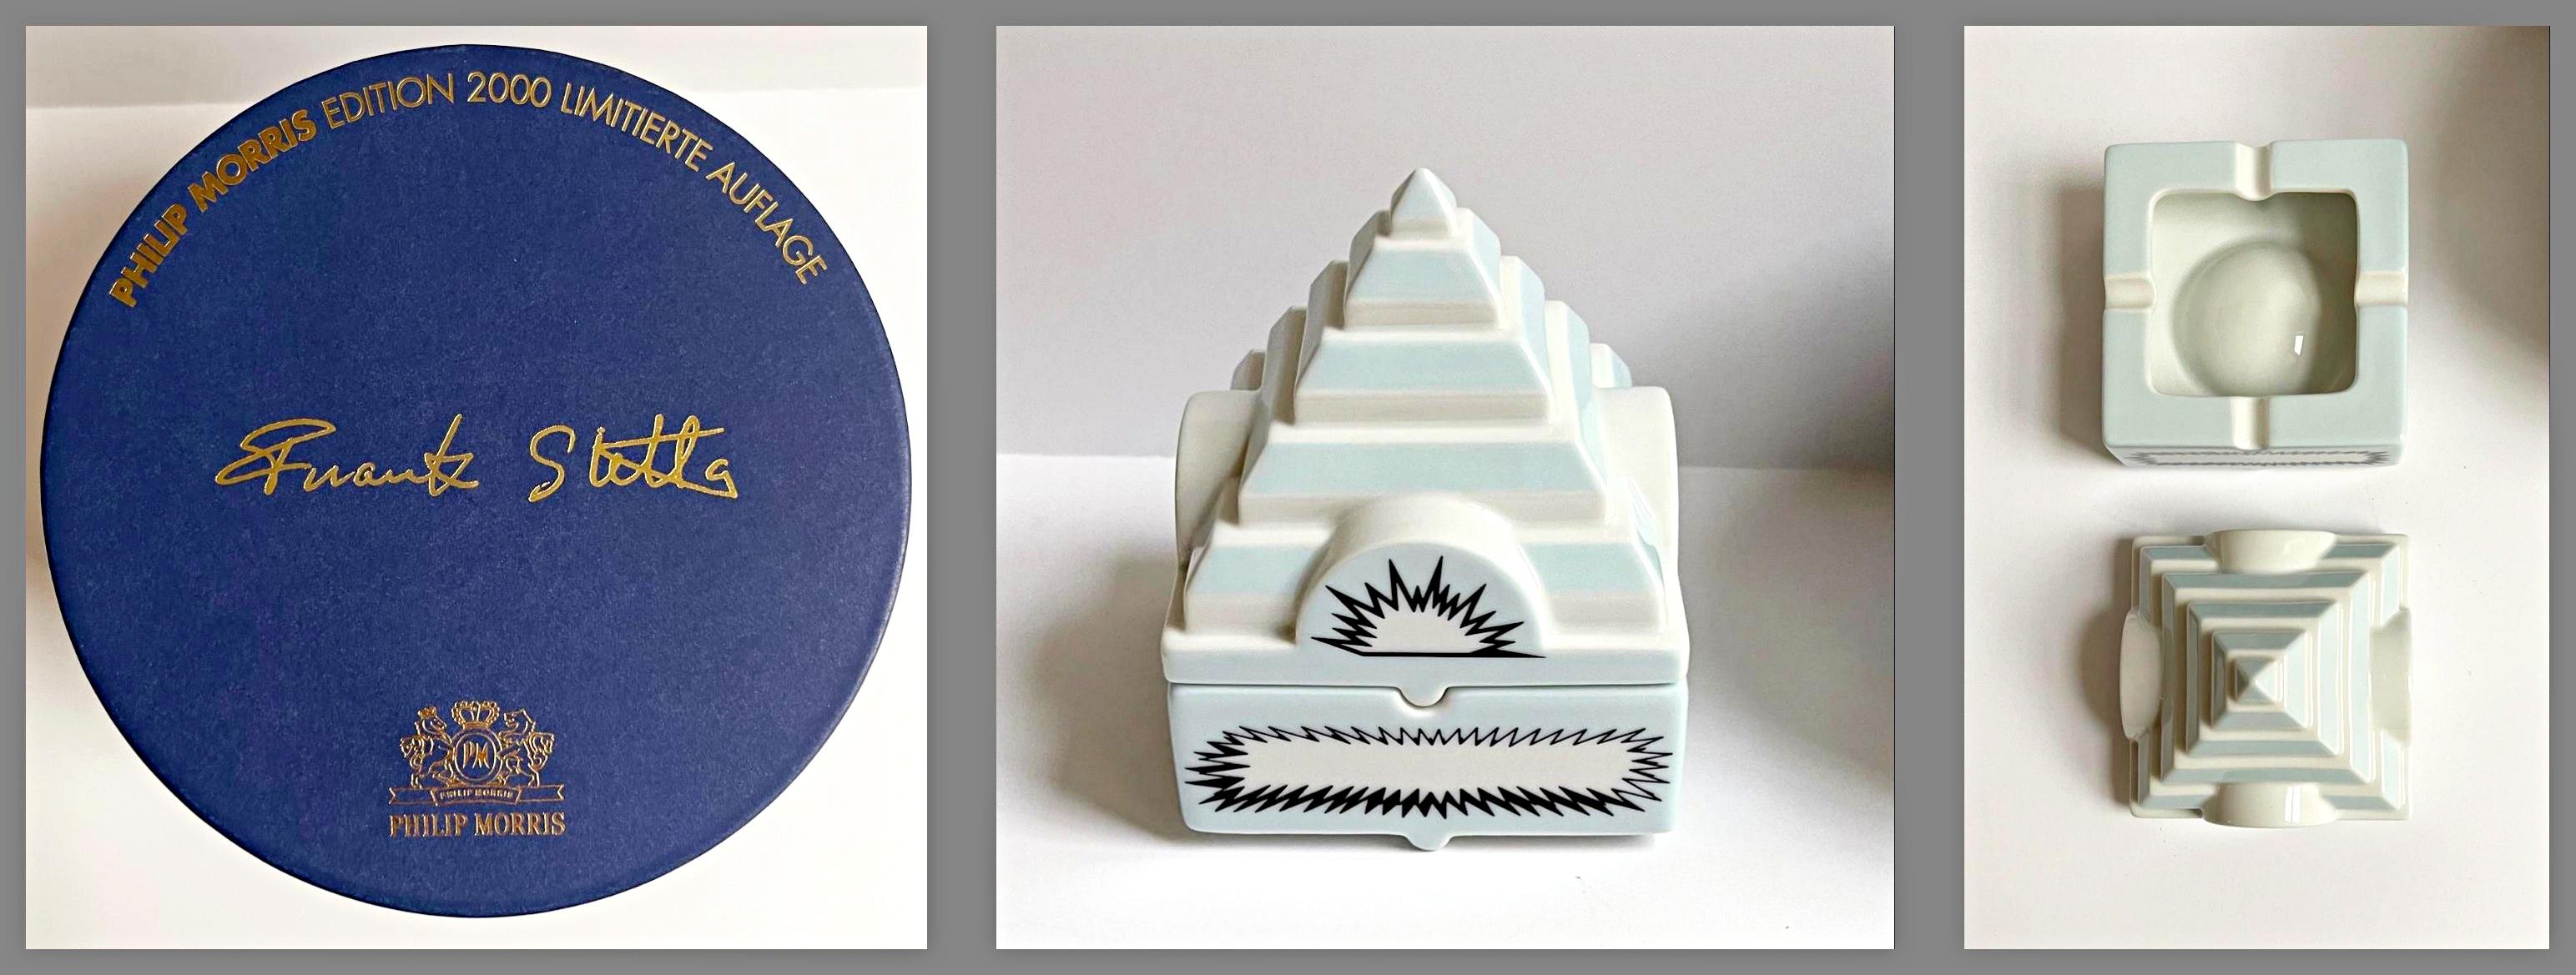 Limited Edition Porcelain Ashtray in Custom Box - Mixed Media Art by Frank Stella